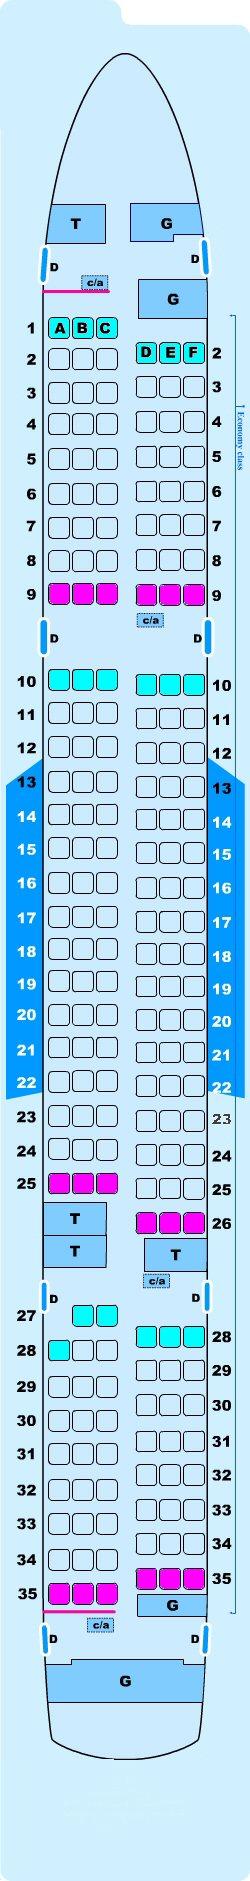 Seat Map Boeing B757 200 | SeatMaestro